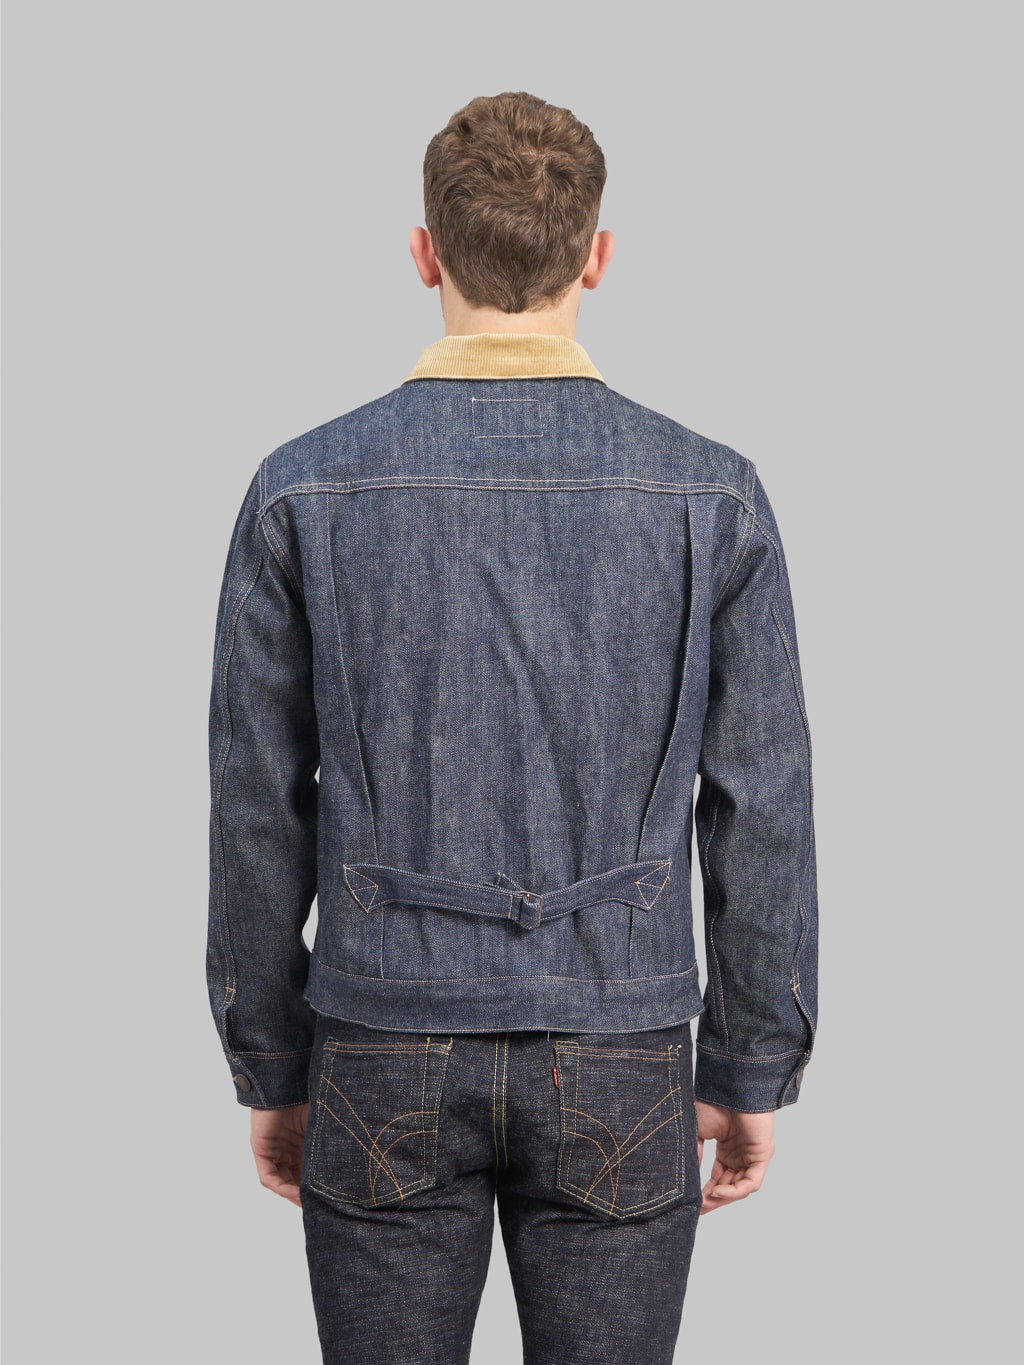 freenote cloth rj 313 ounce indigo selvedge denim jacket  back fit